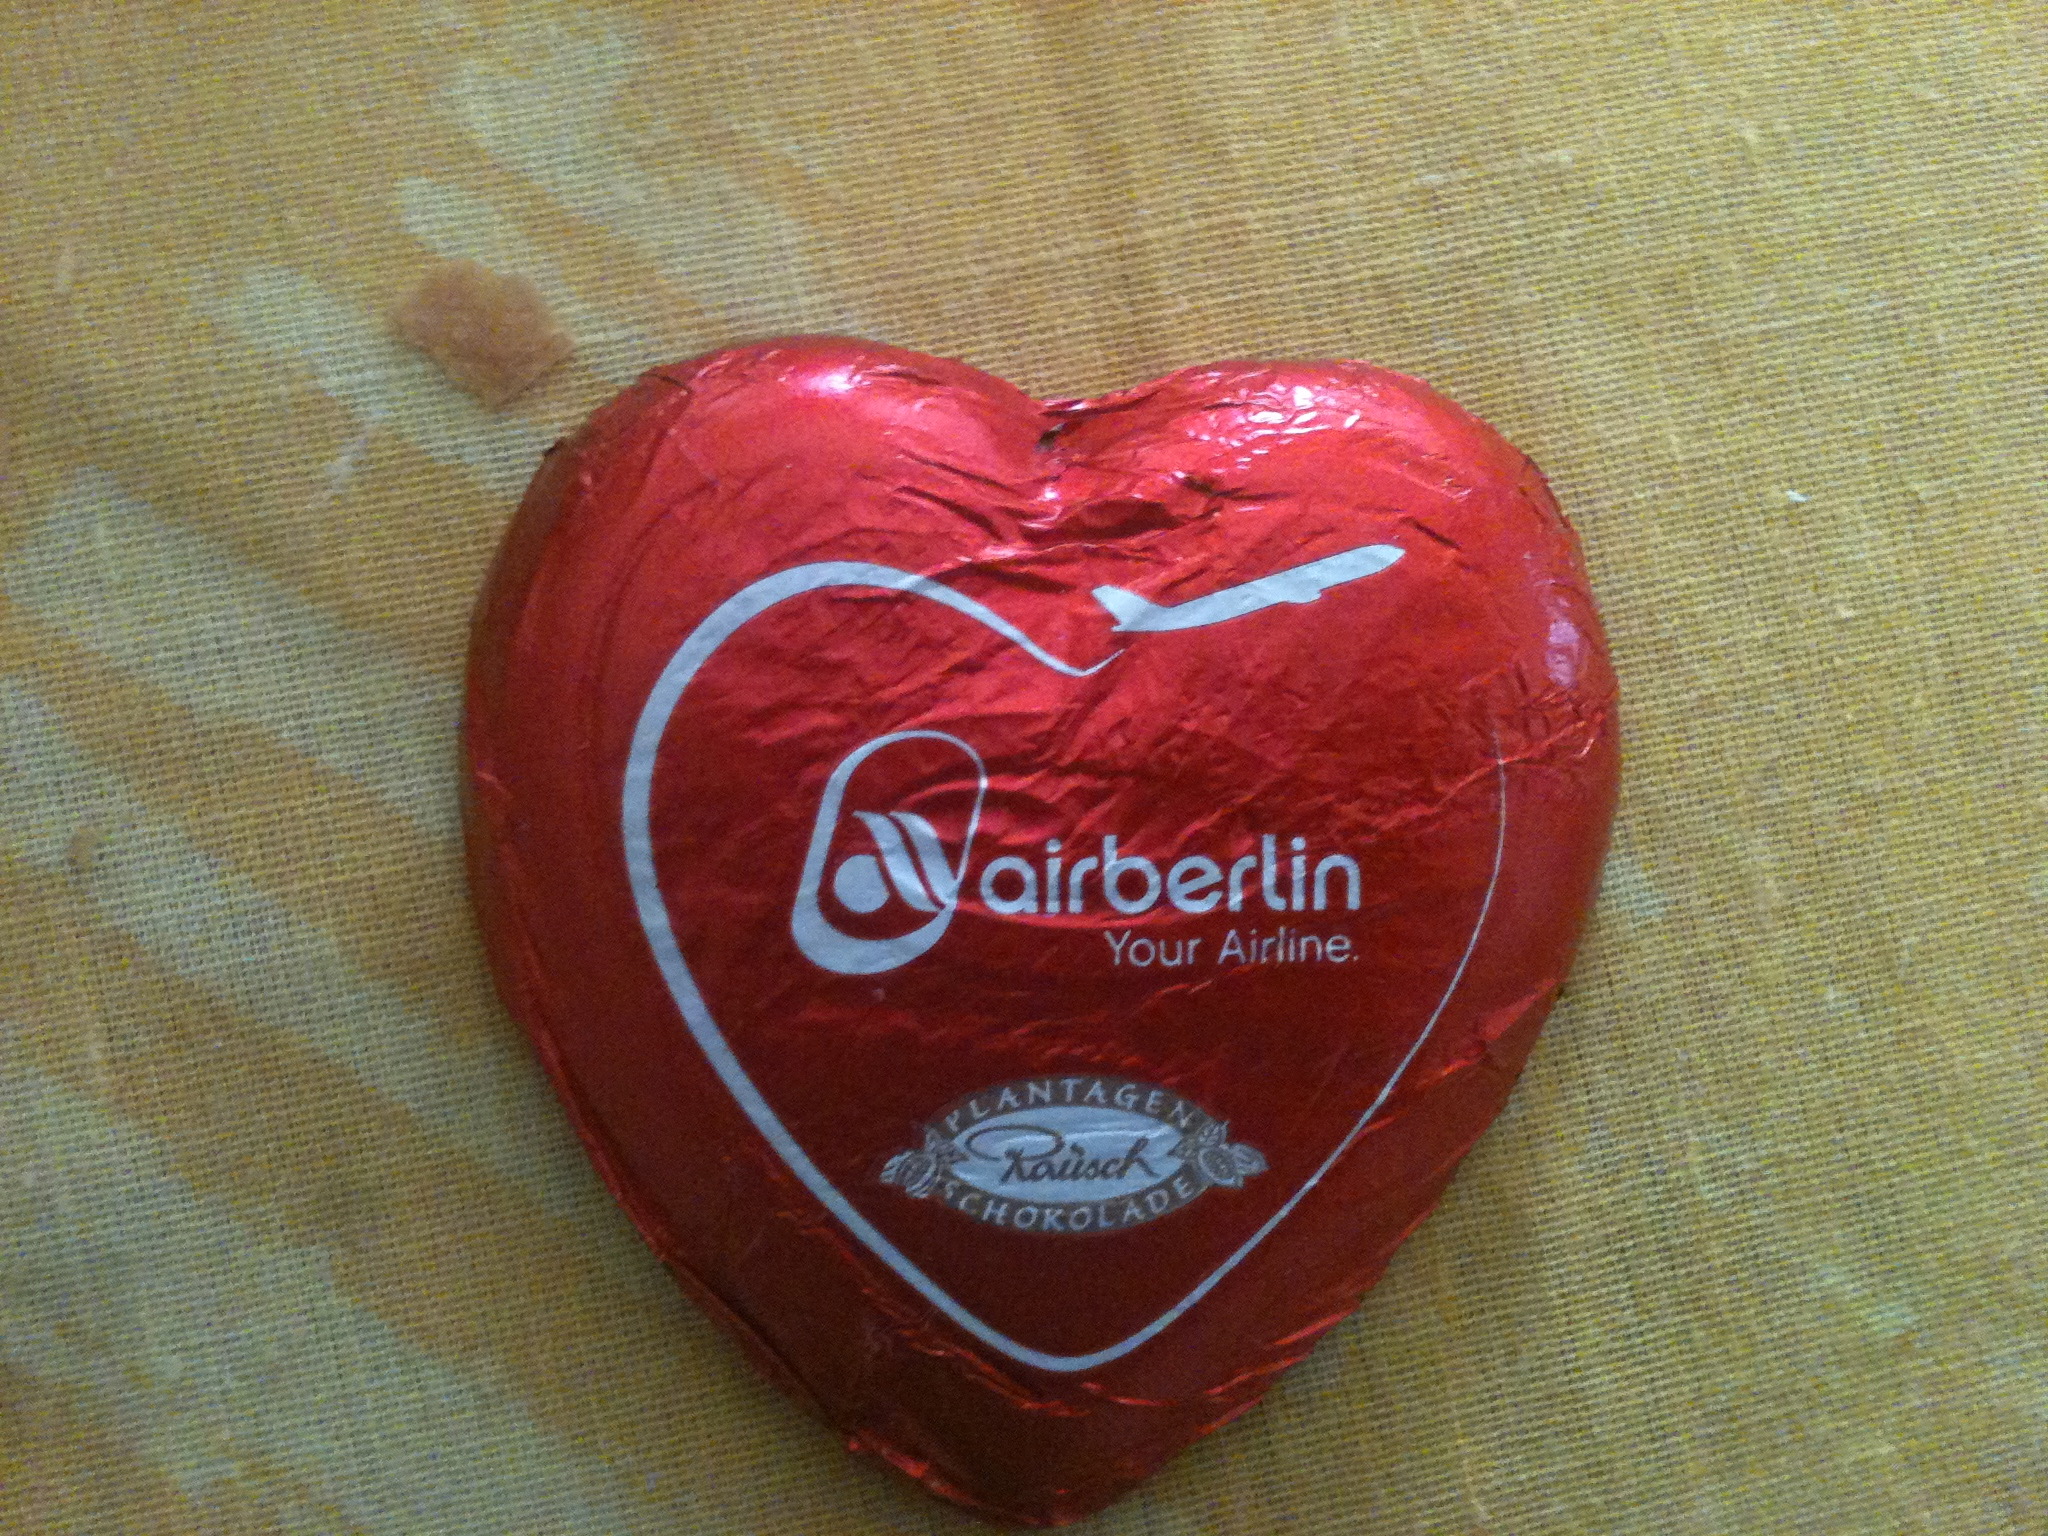 a heart shaped chocolate candy